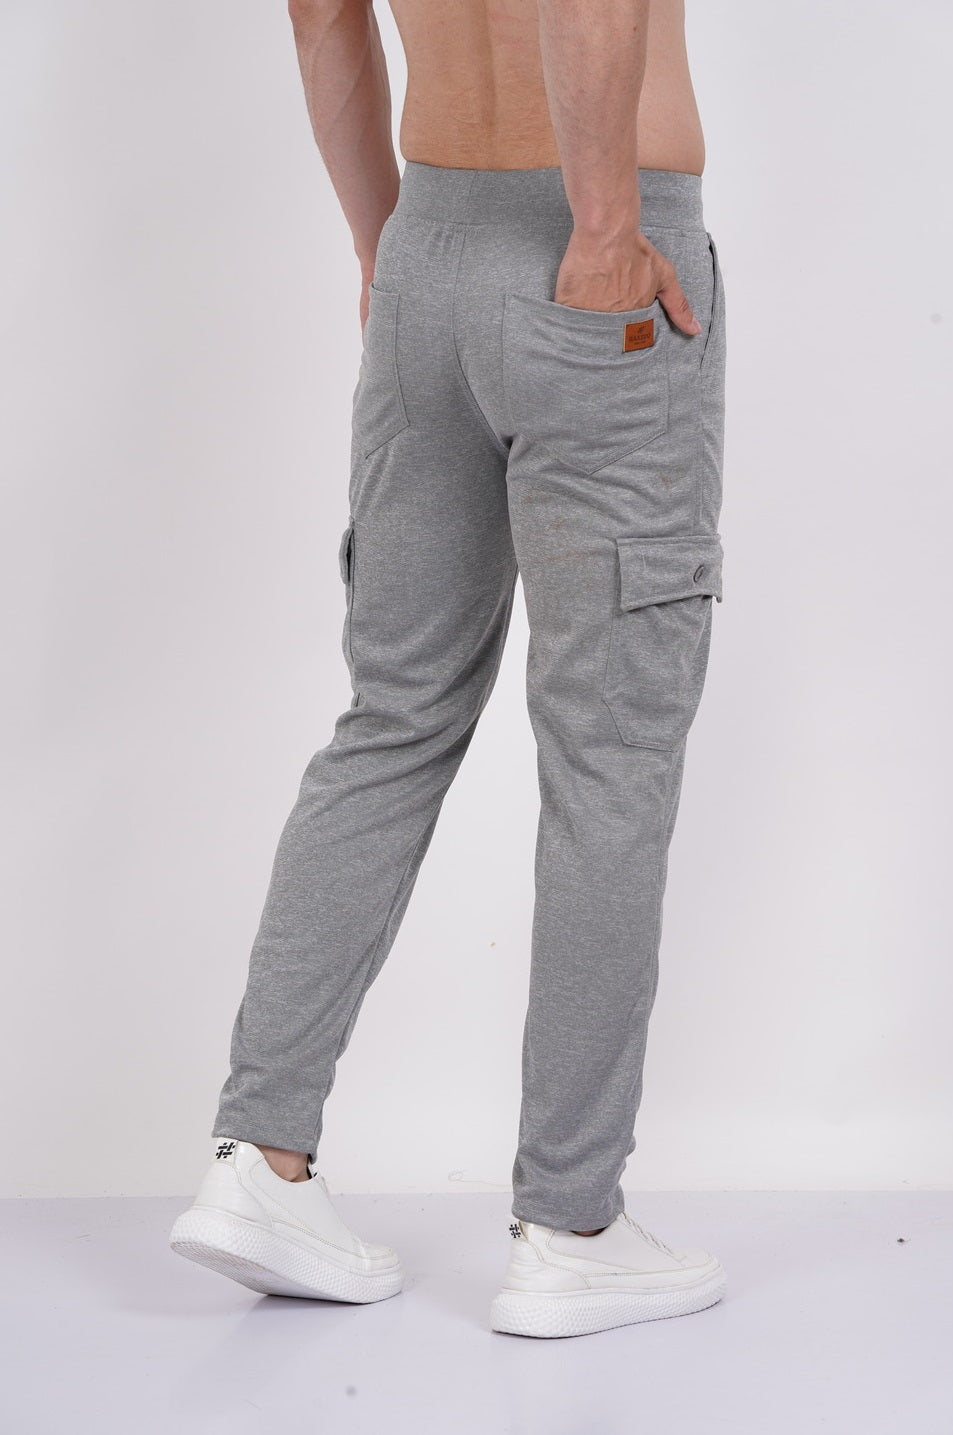 Grey Cargo Pants Mens - Dri-FIT